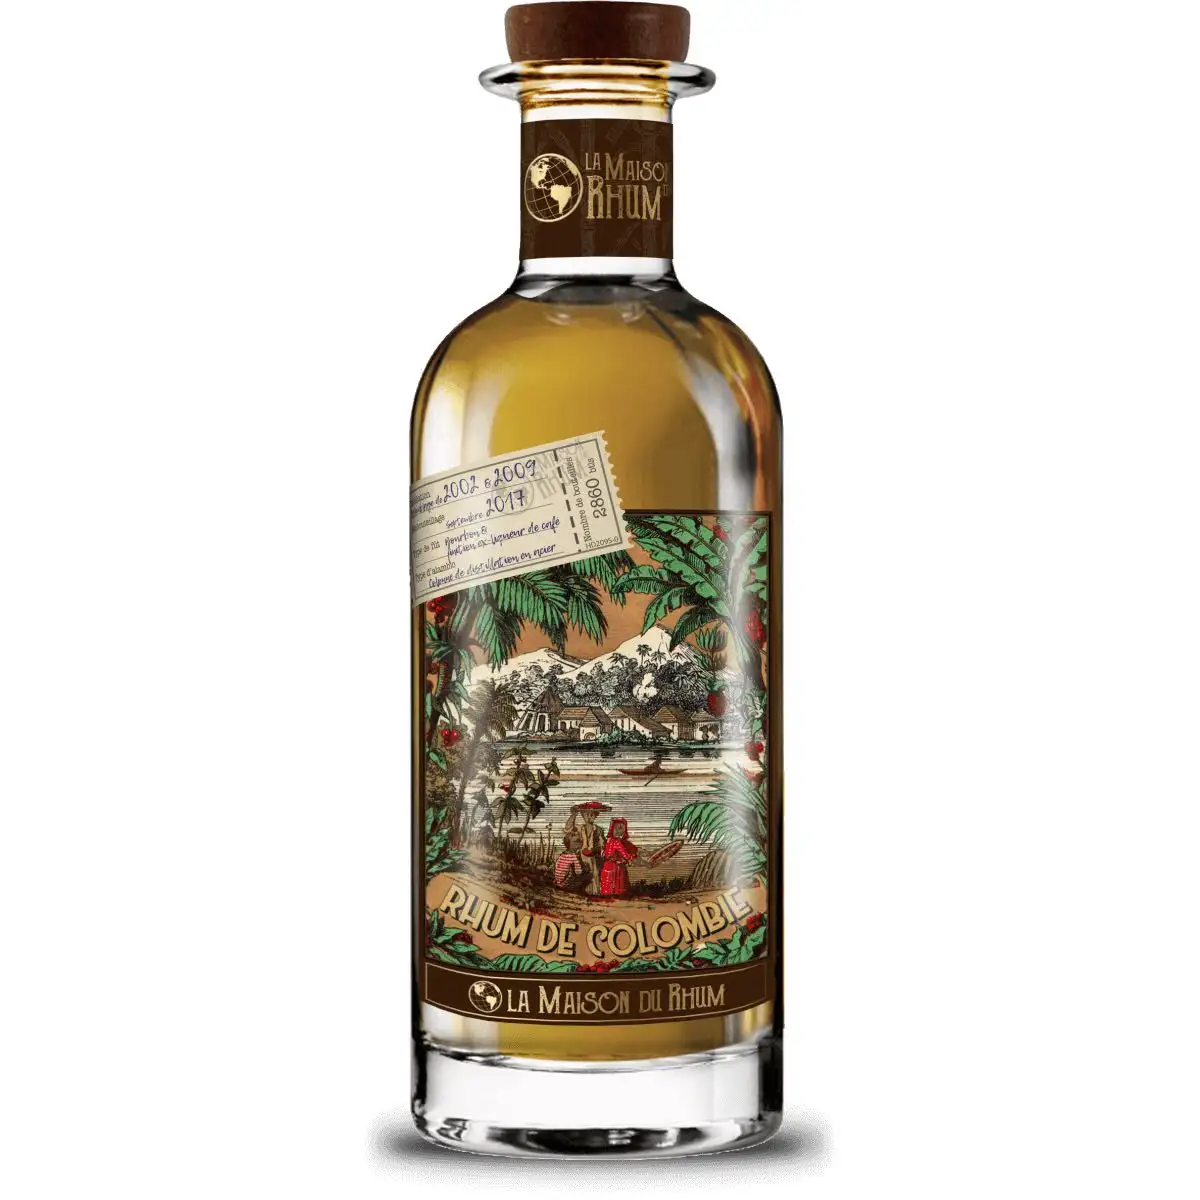 Image of the front of the bottle of the rum La Maison du Rhum #1